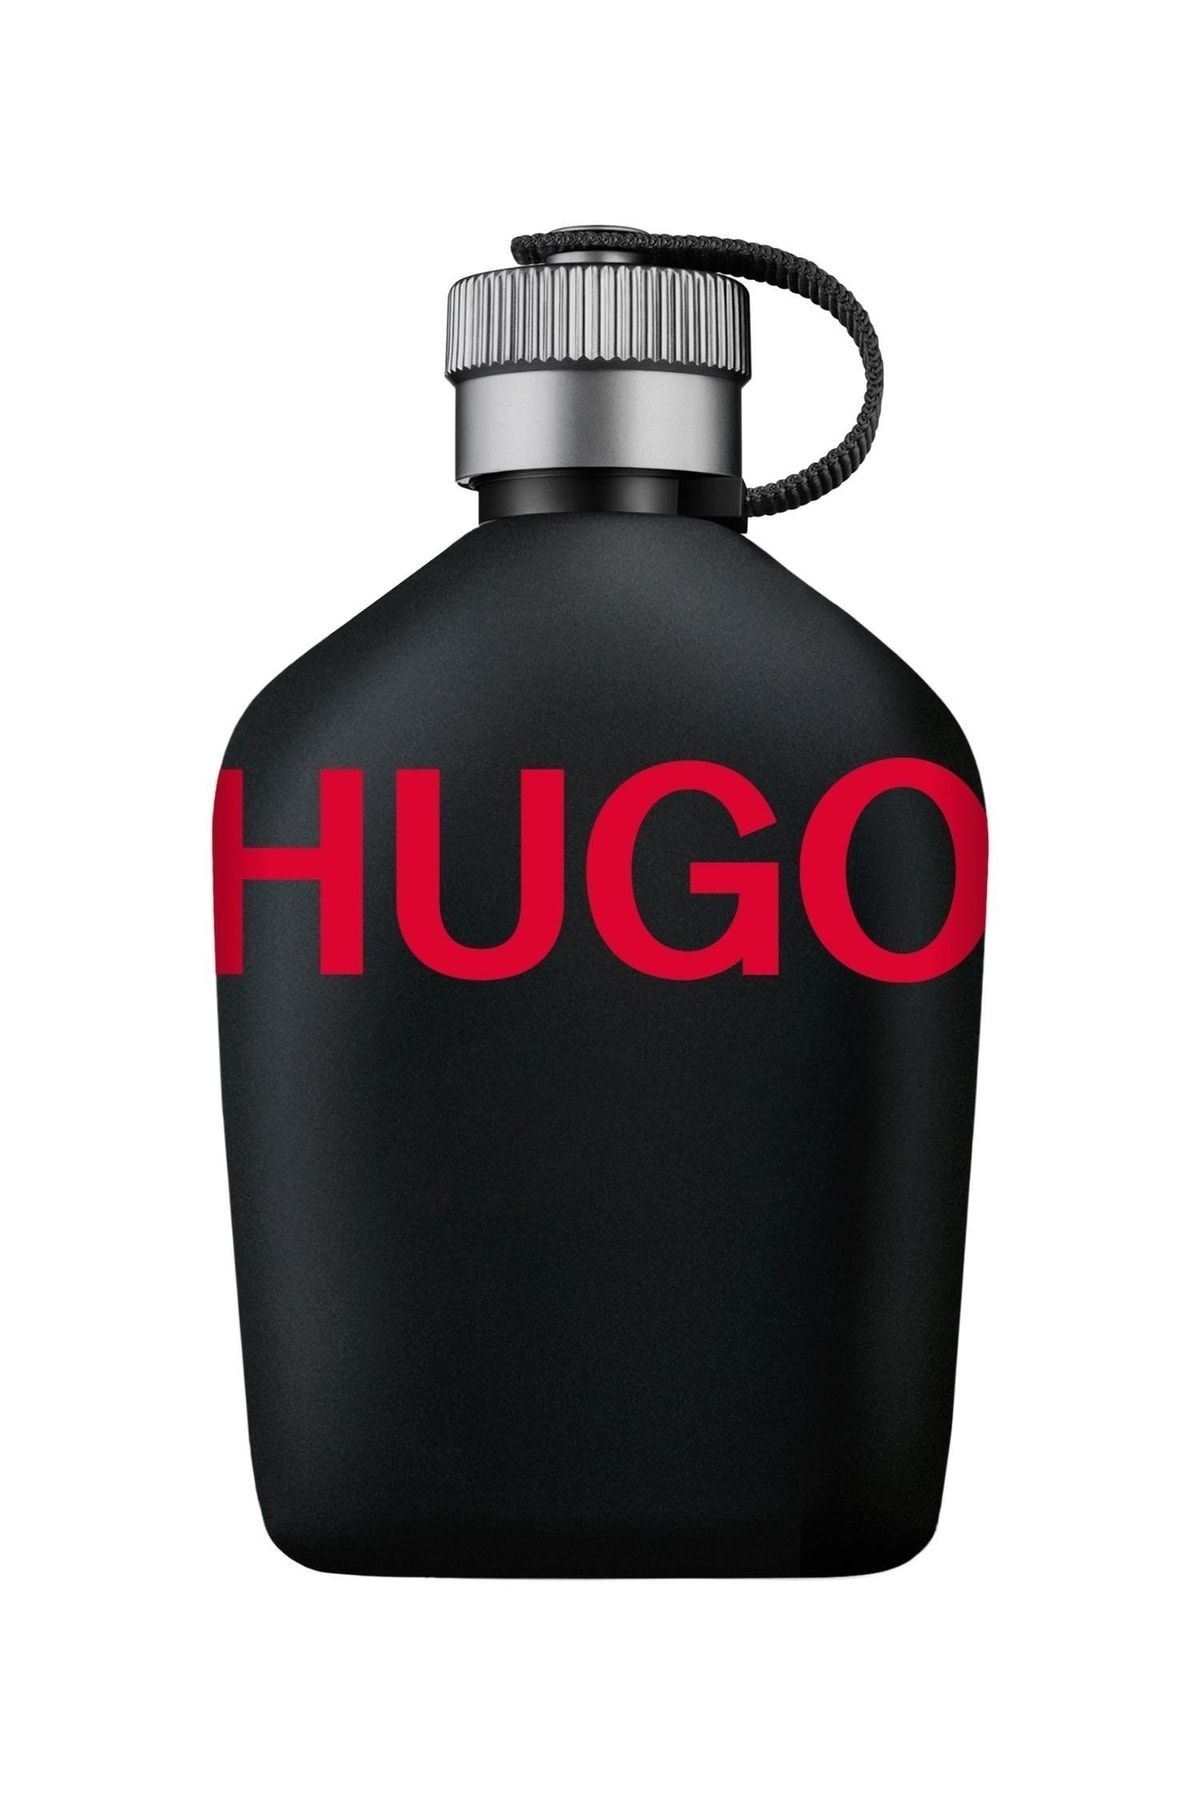 Hugo Boss just different 40 ml. Духи Hugo Boss just different. Hugo Boss "Hugo Red" EDT, 100ml. Hugo Boss / туалетная вода just different, 75 мл. Ml hugo